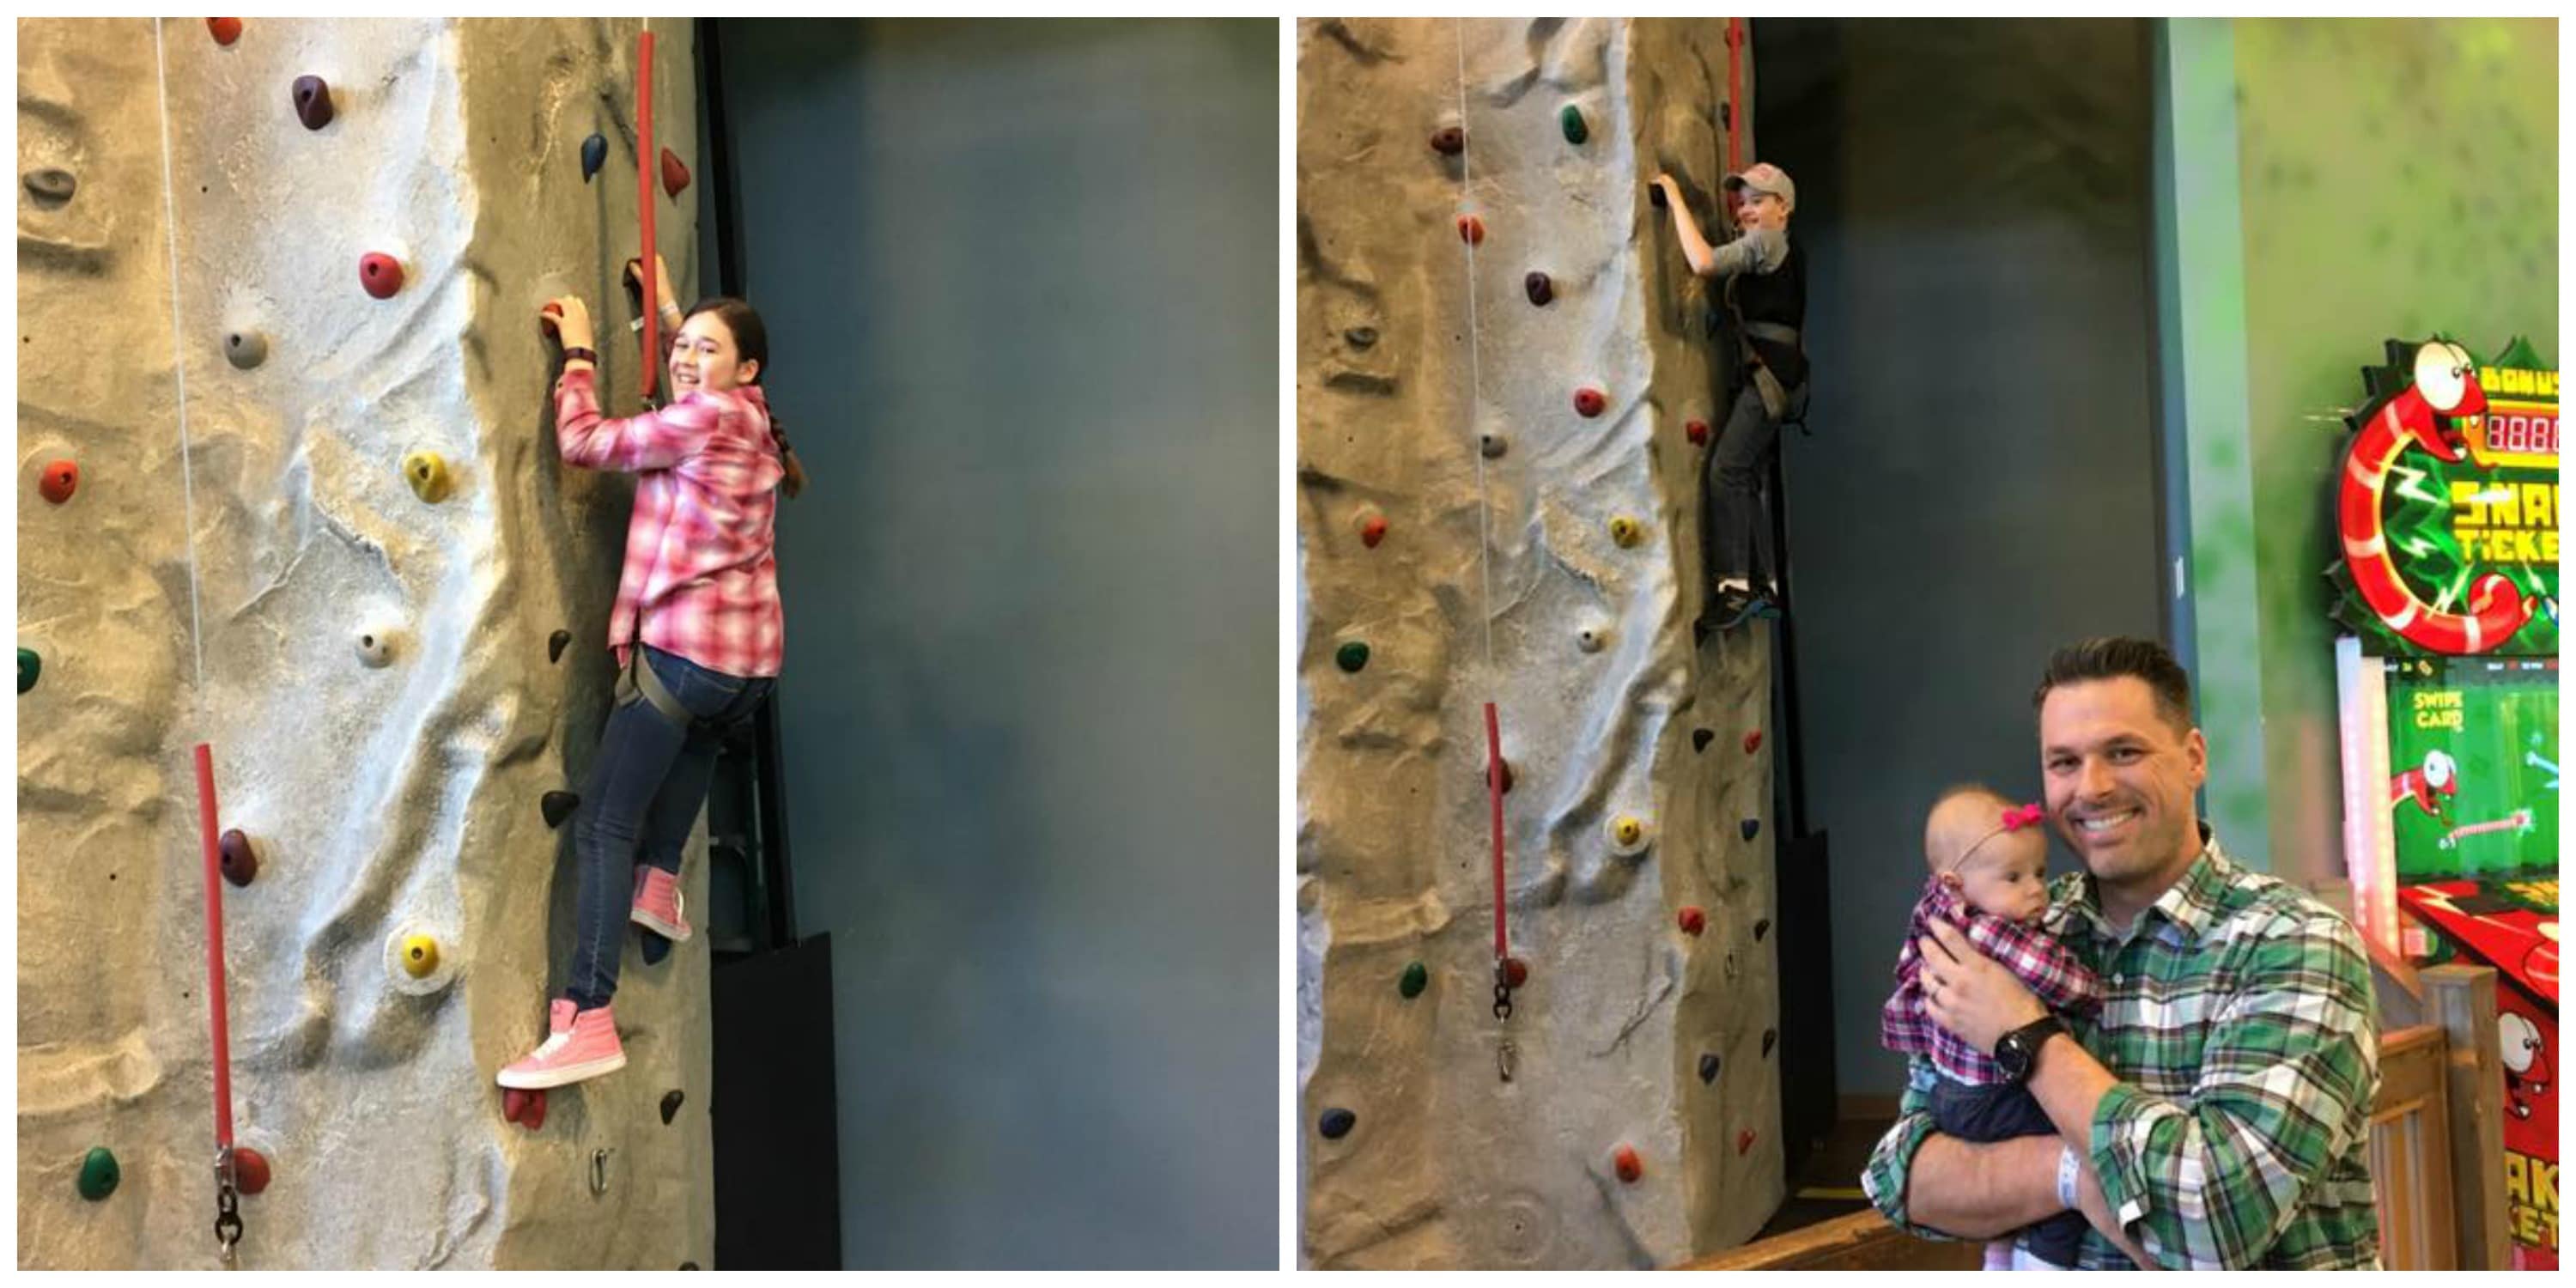 climbing wall with kids